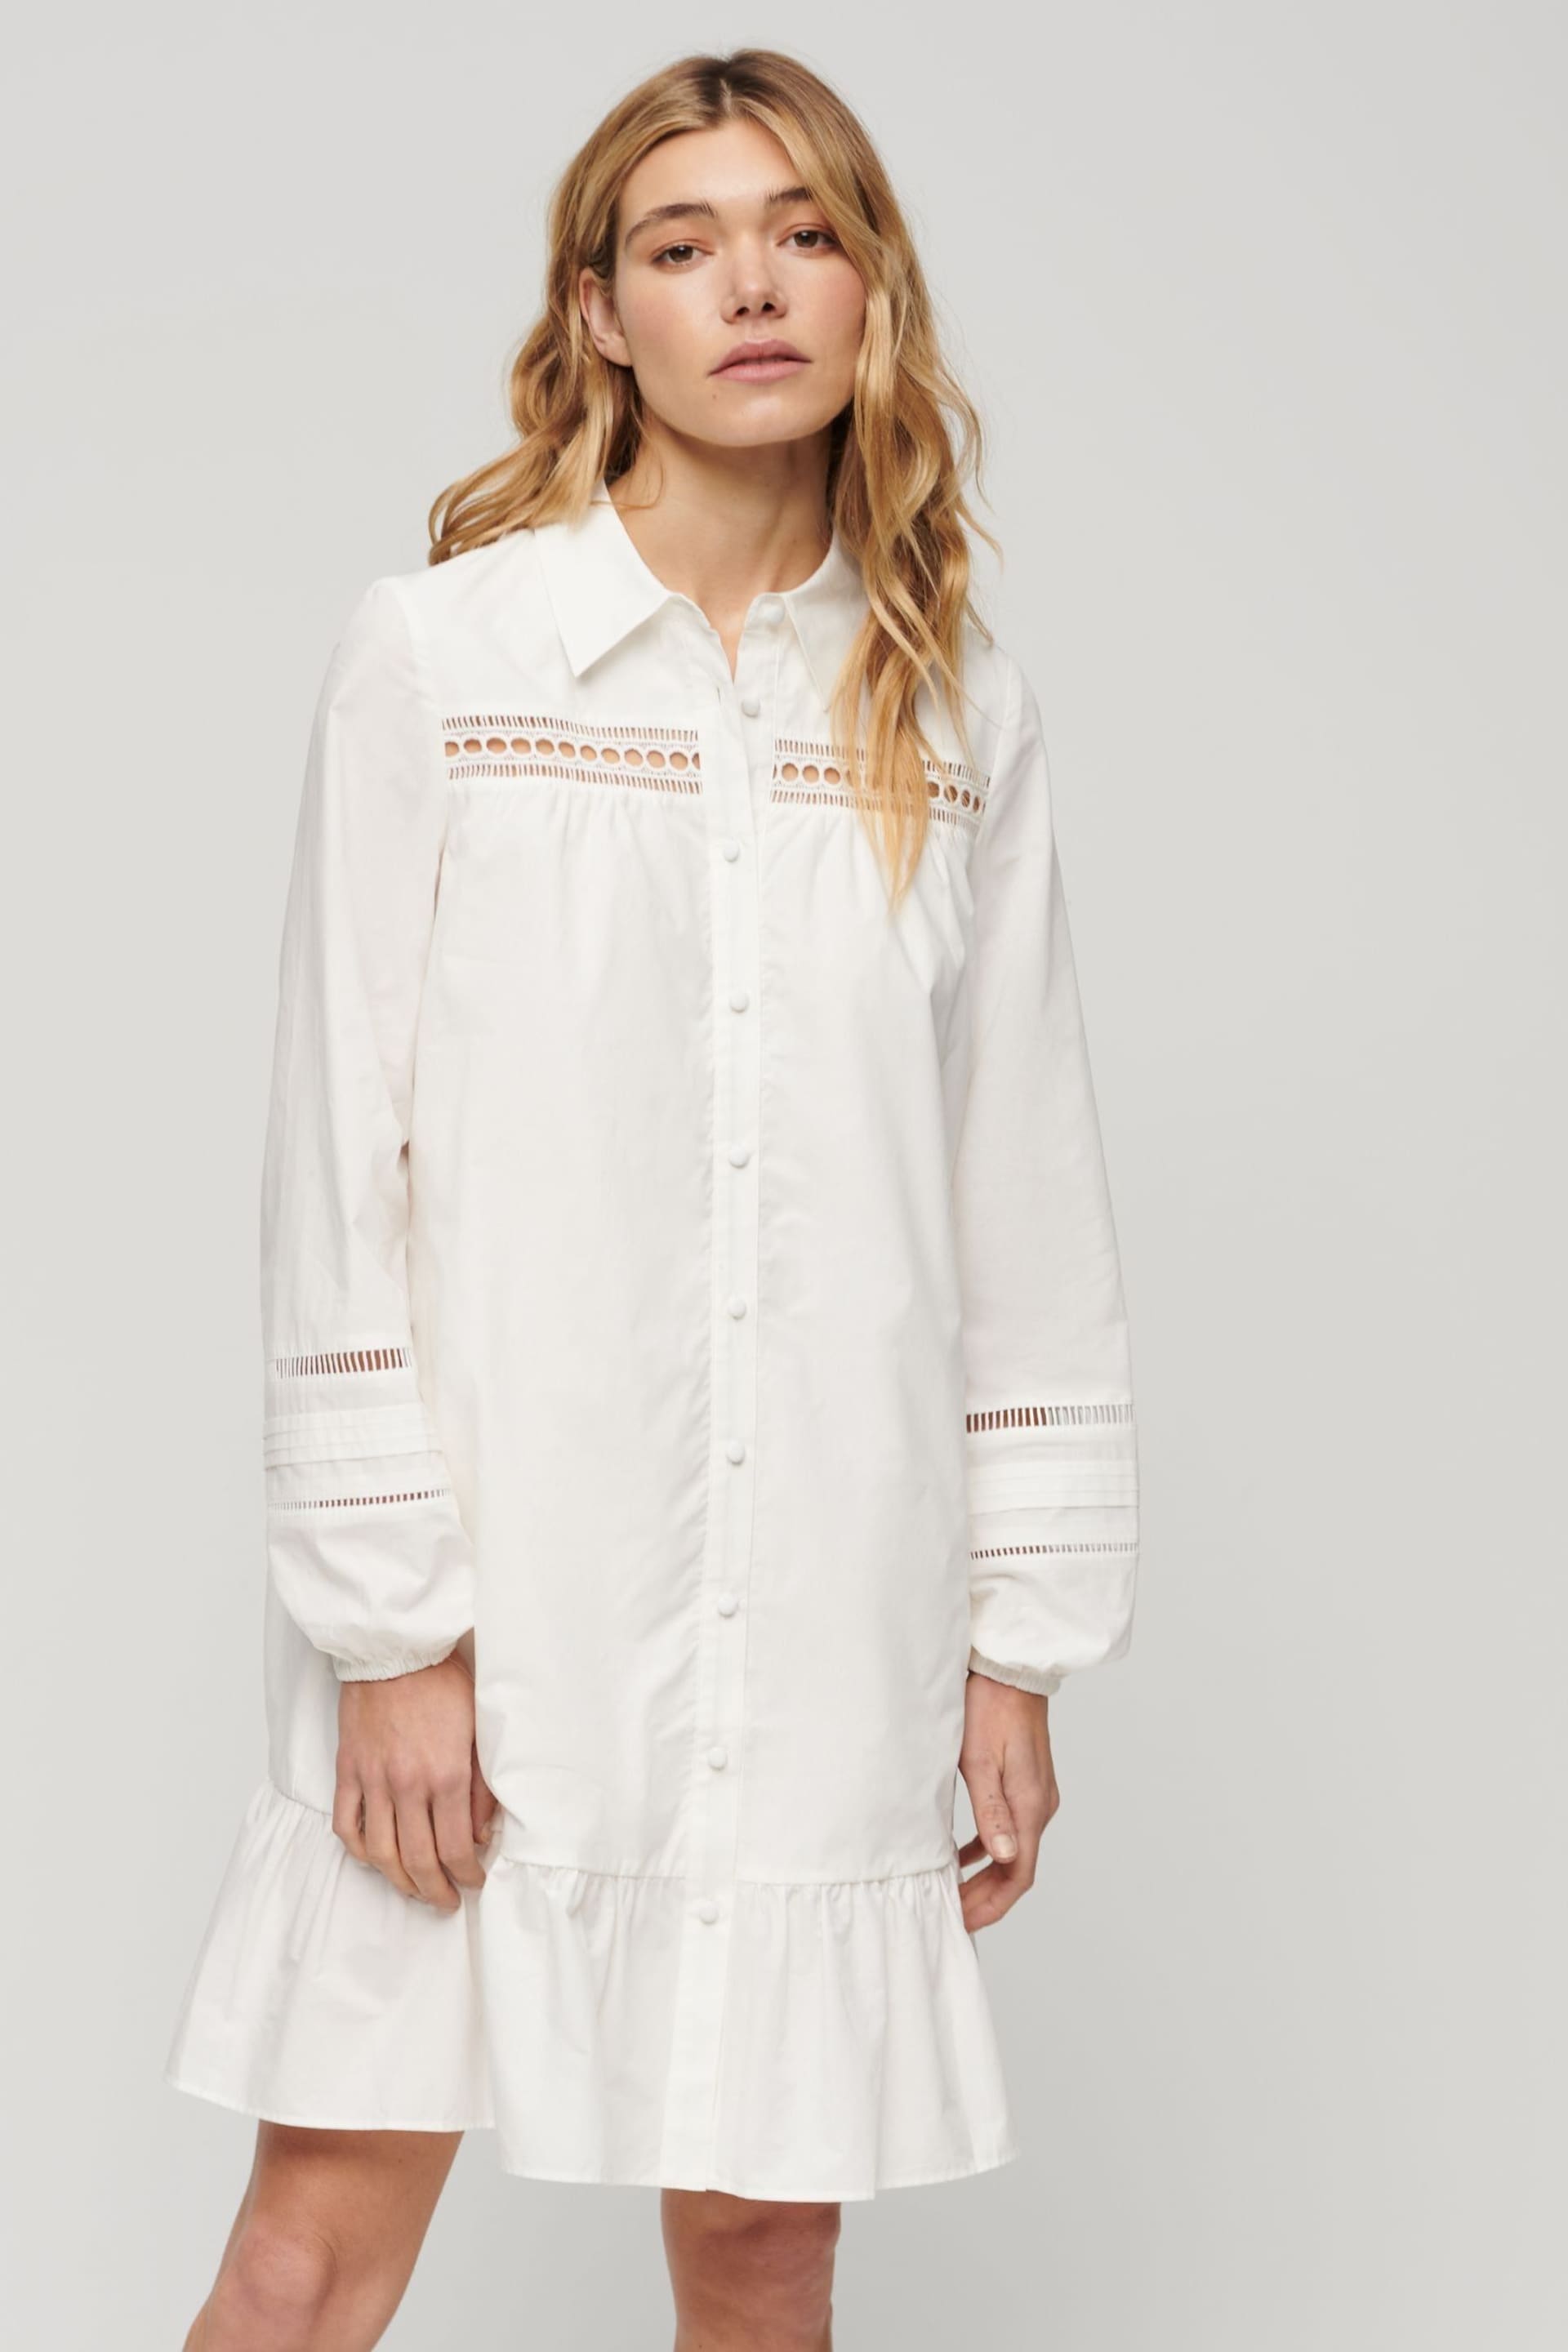 Superdry White Lace Mix Shirt Dress - Image 5 of 9